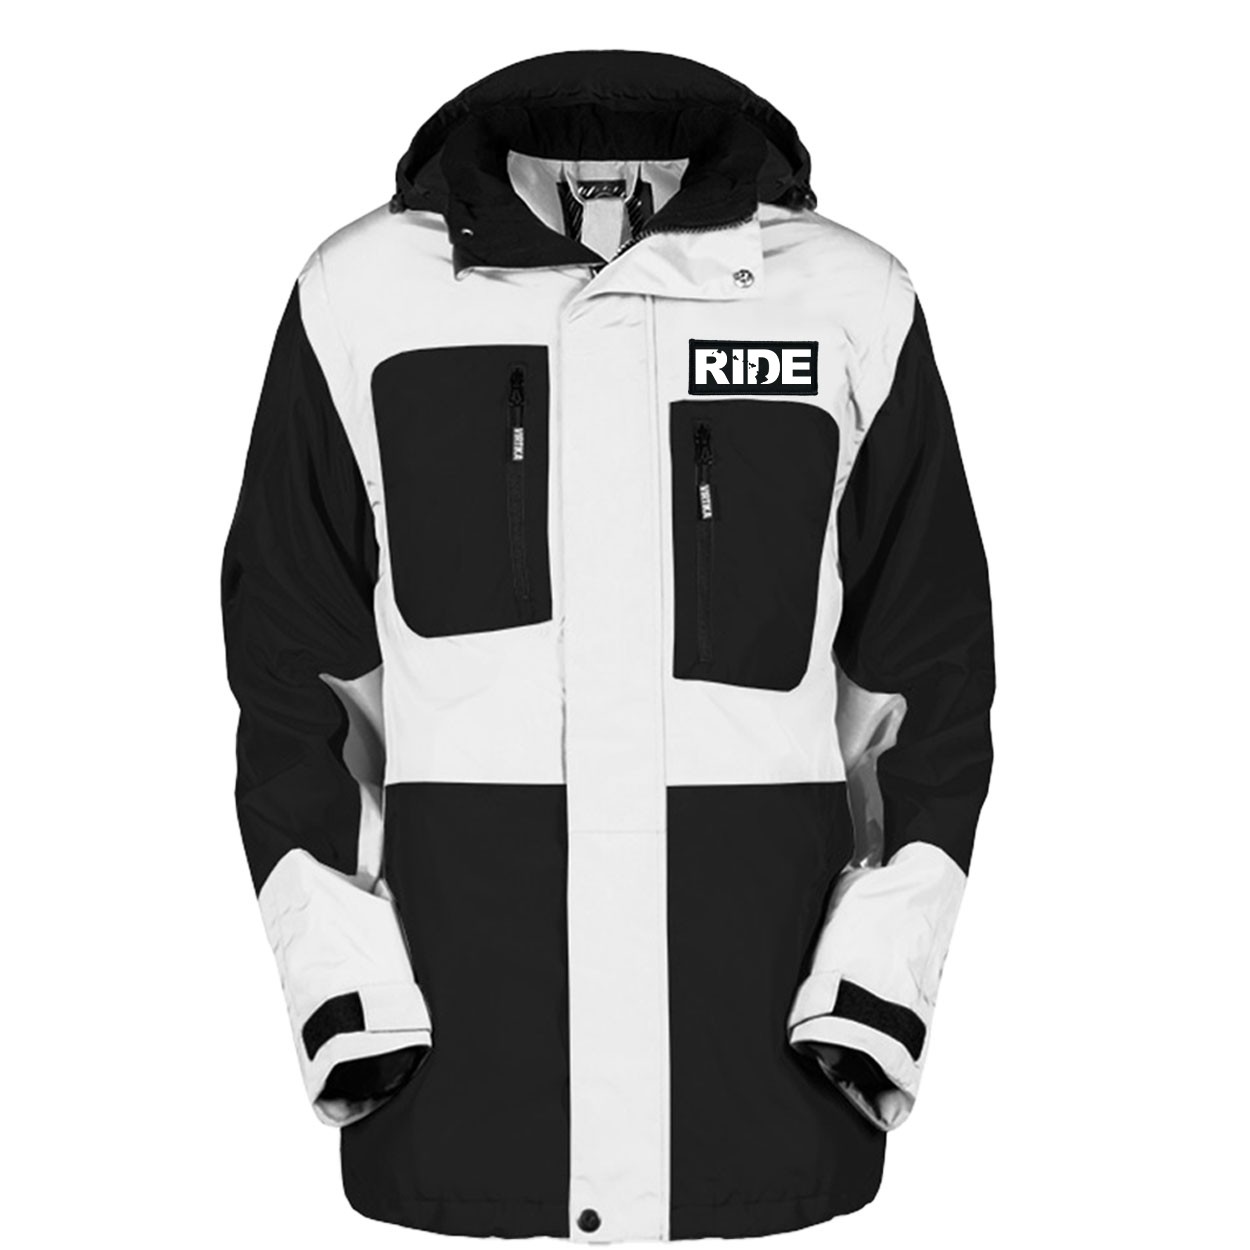 Ride Hawaii Pro Waterproof Breathable Winter Virtika Jacket Black/White (White Logo)